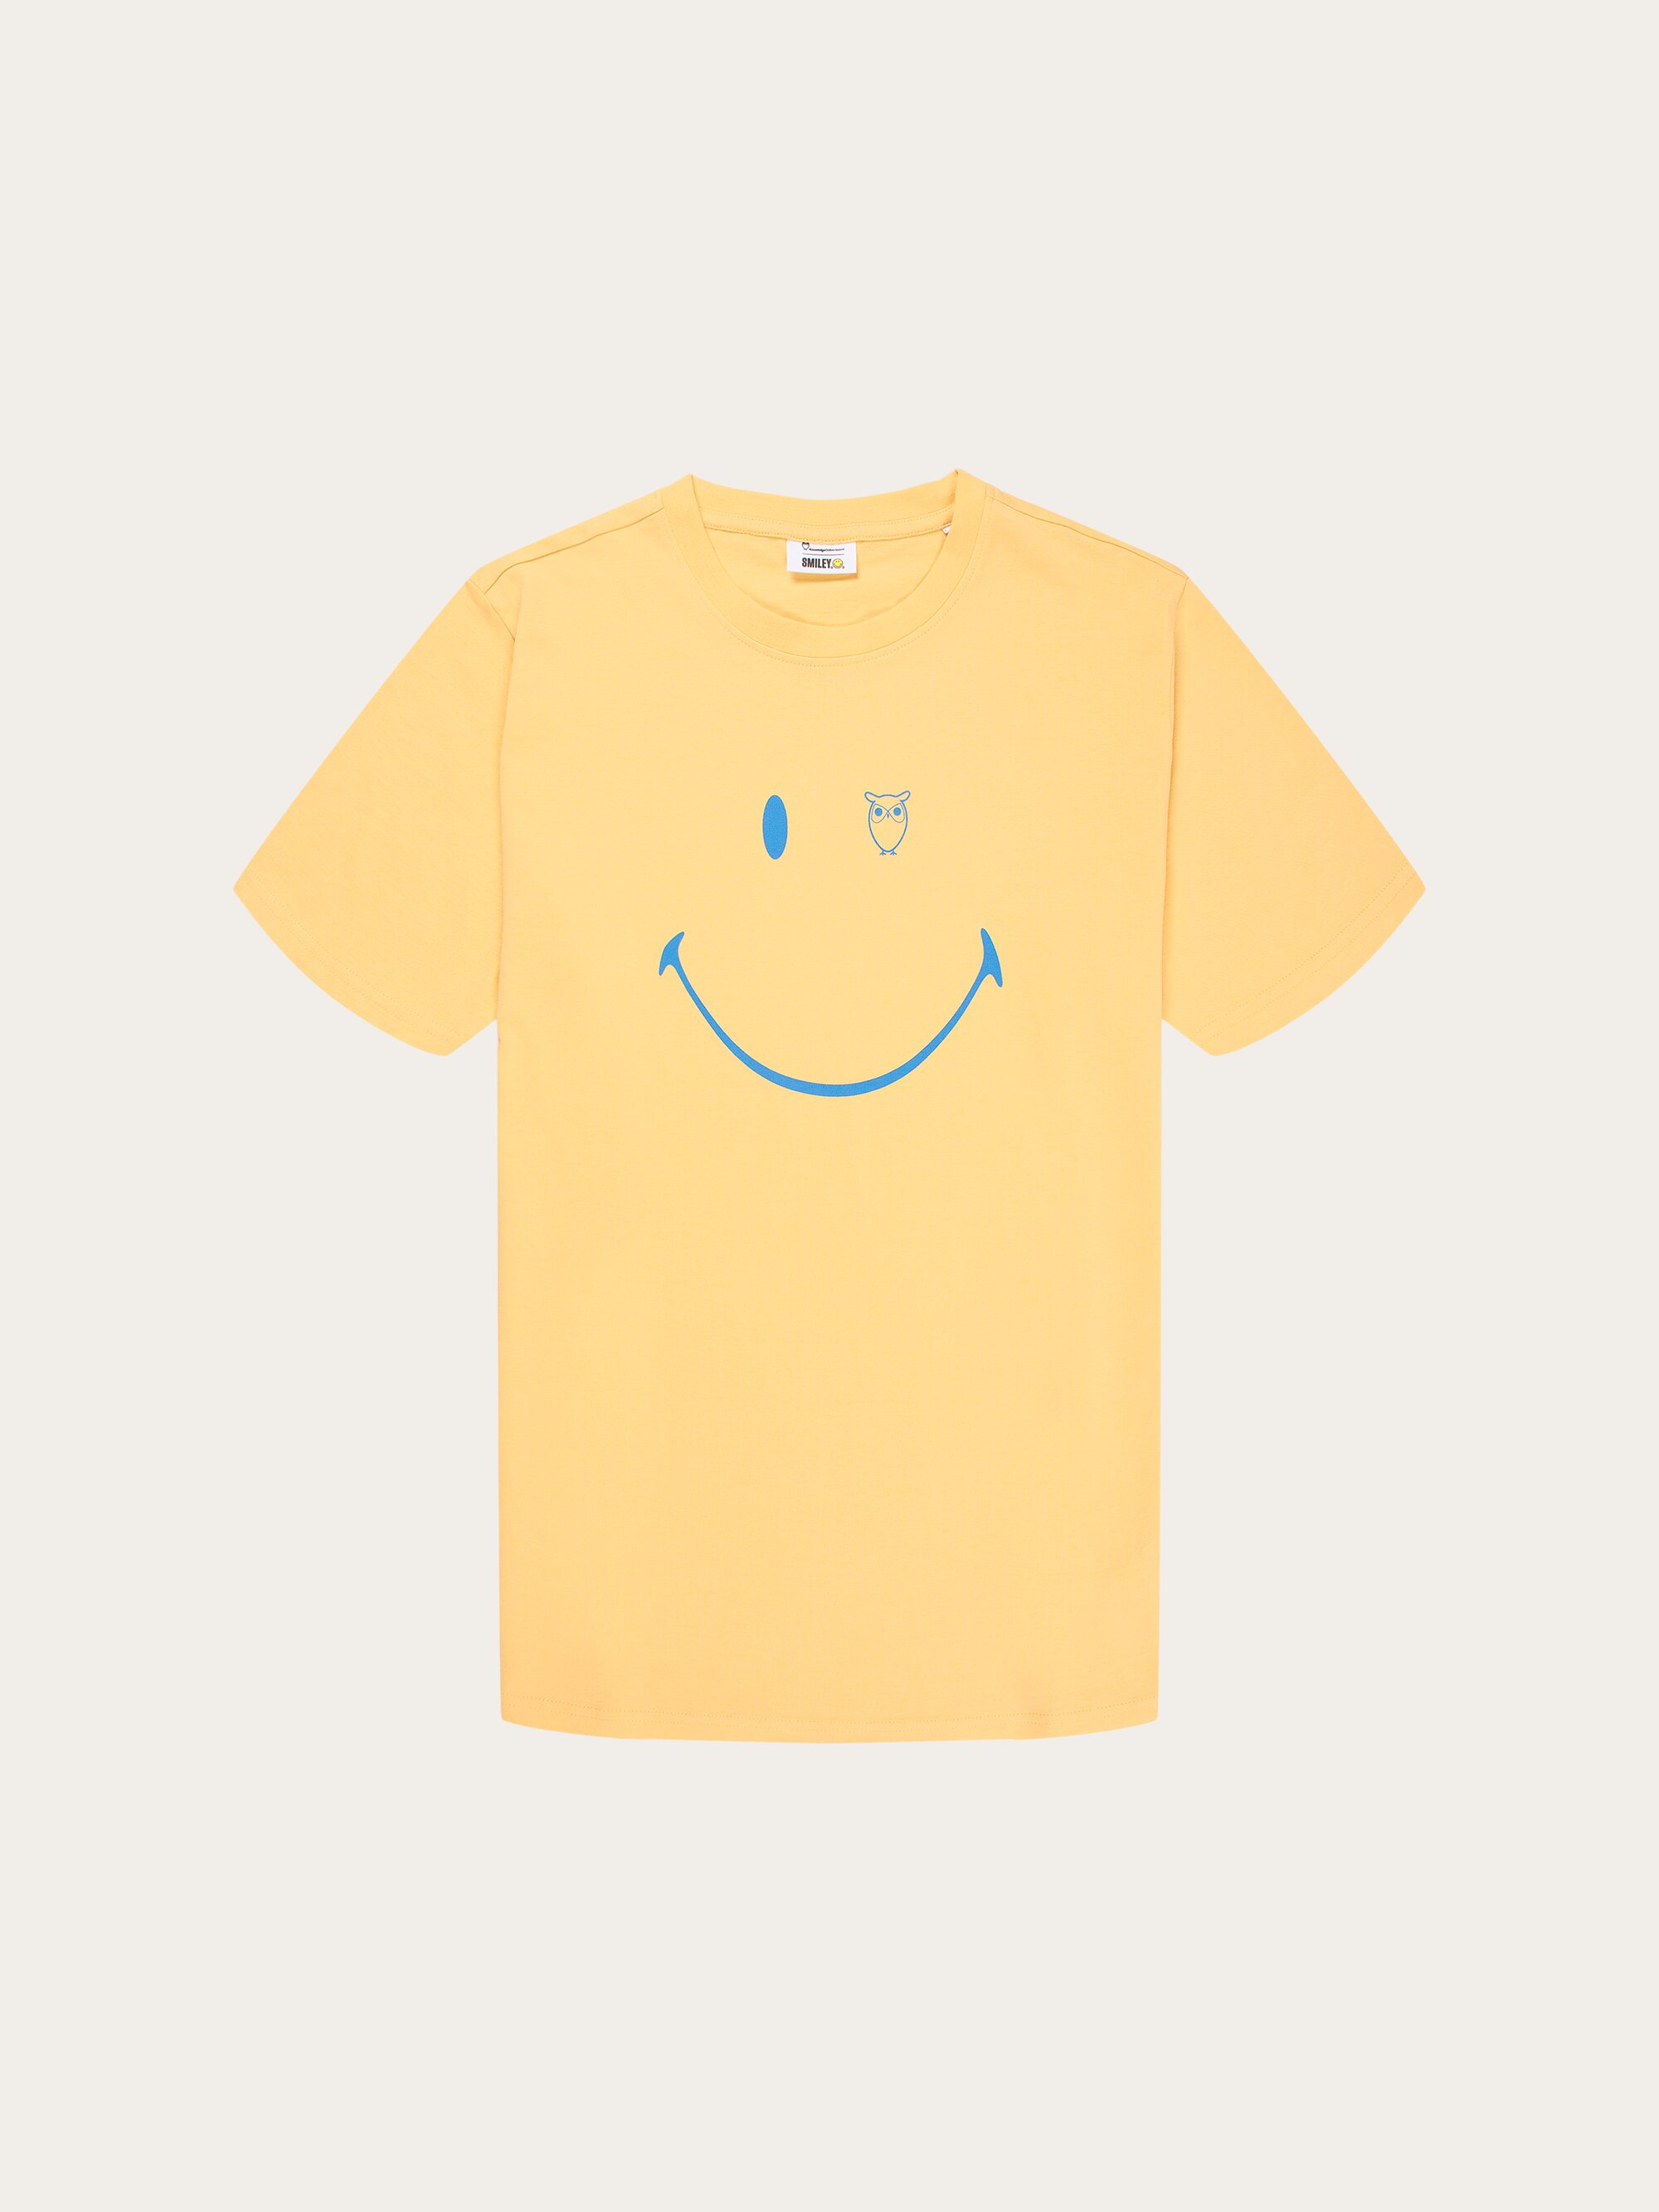 Smiley T-shirt, Impala, S